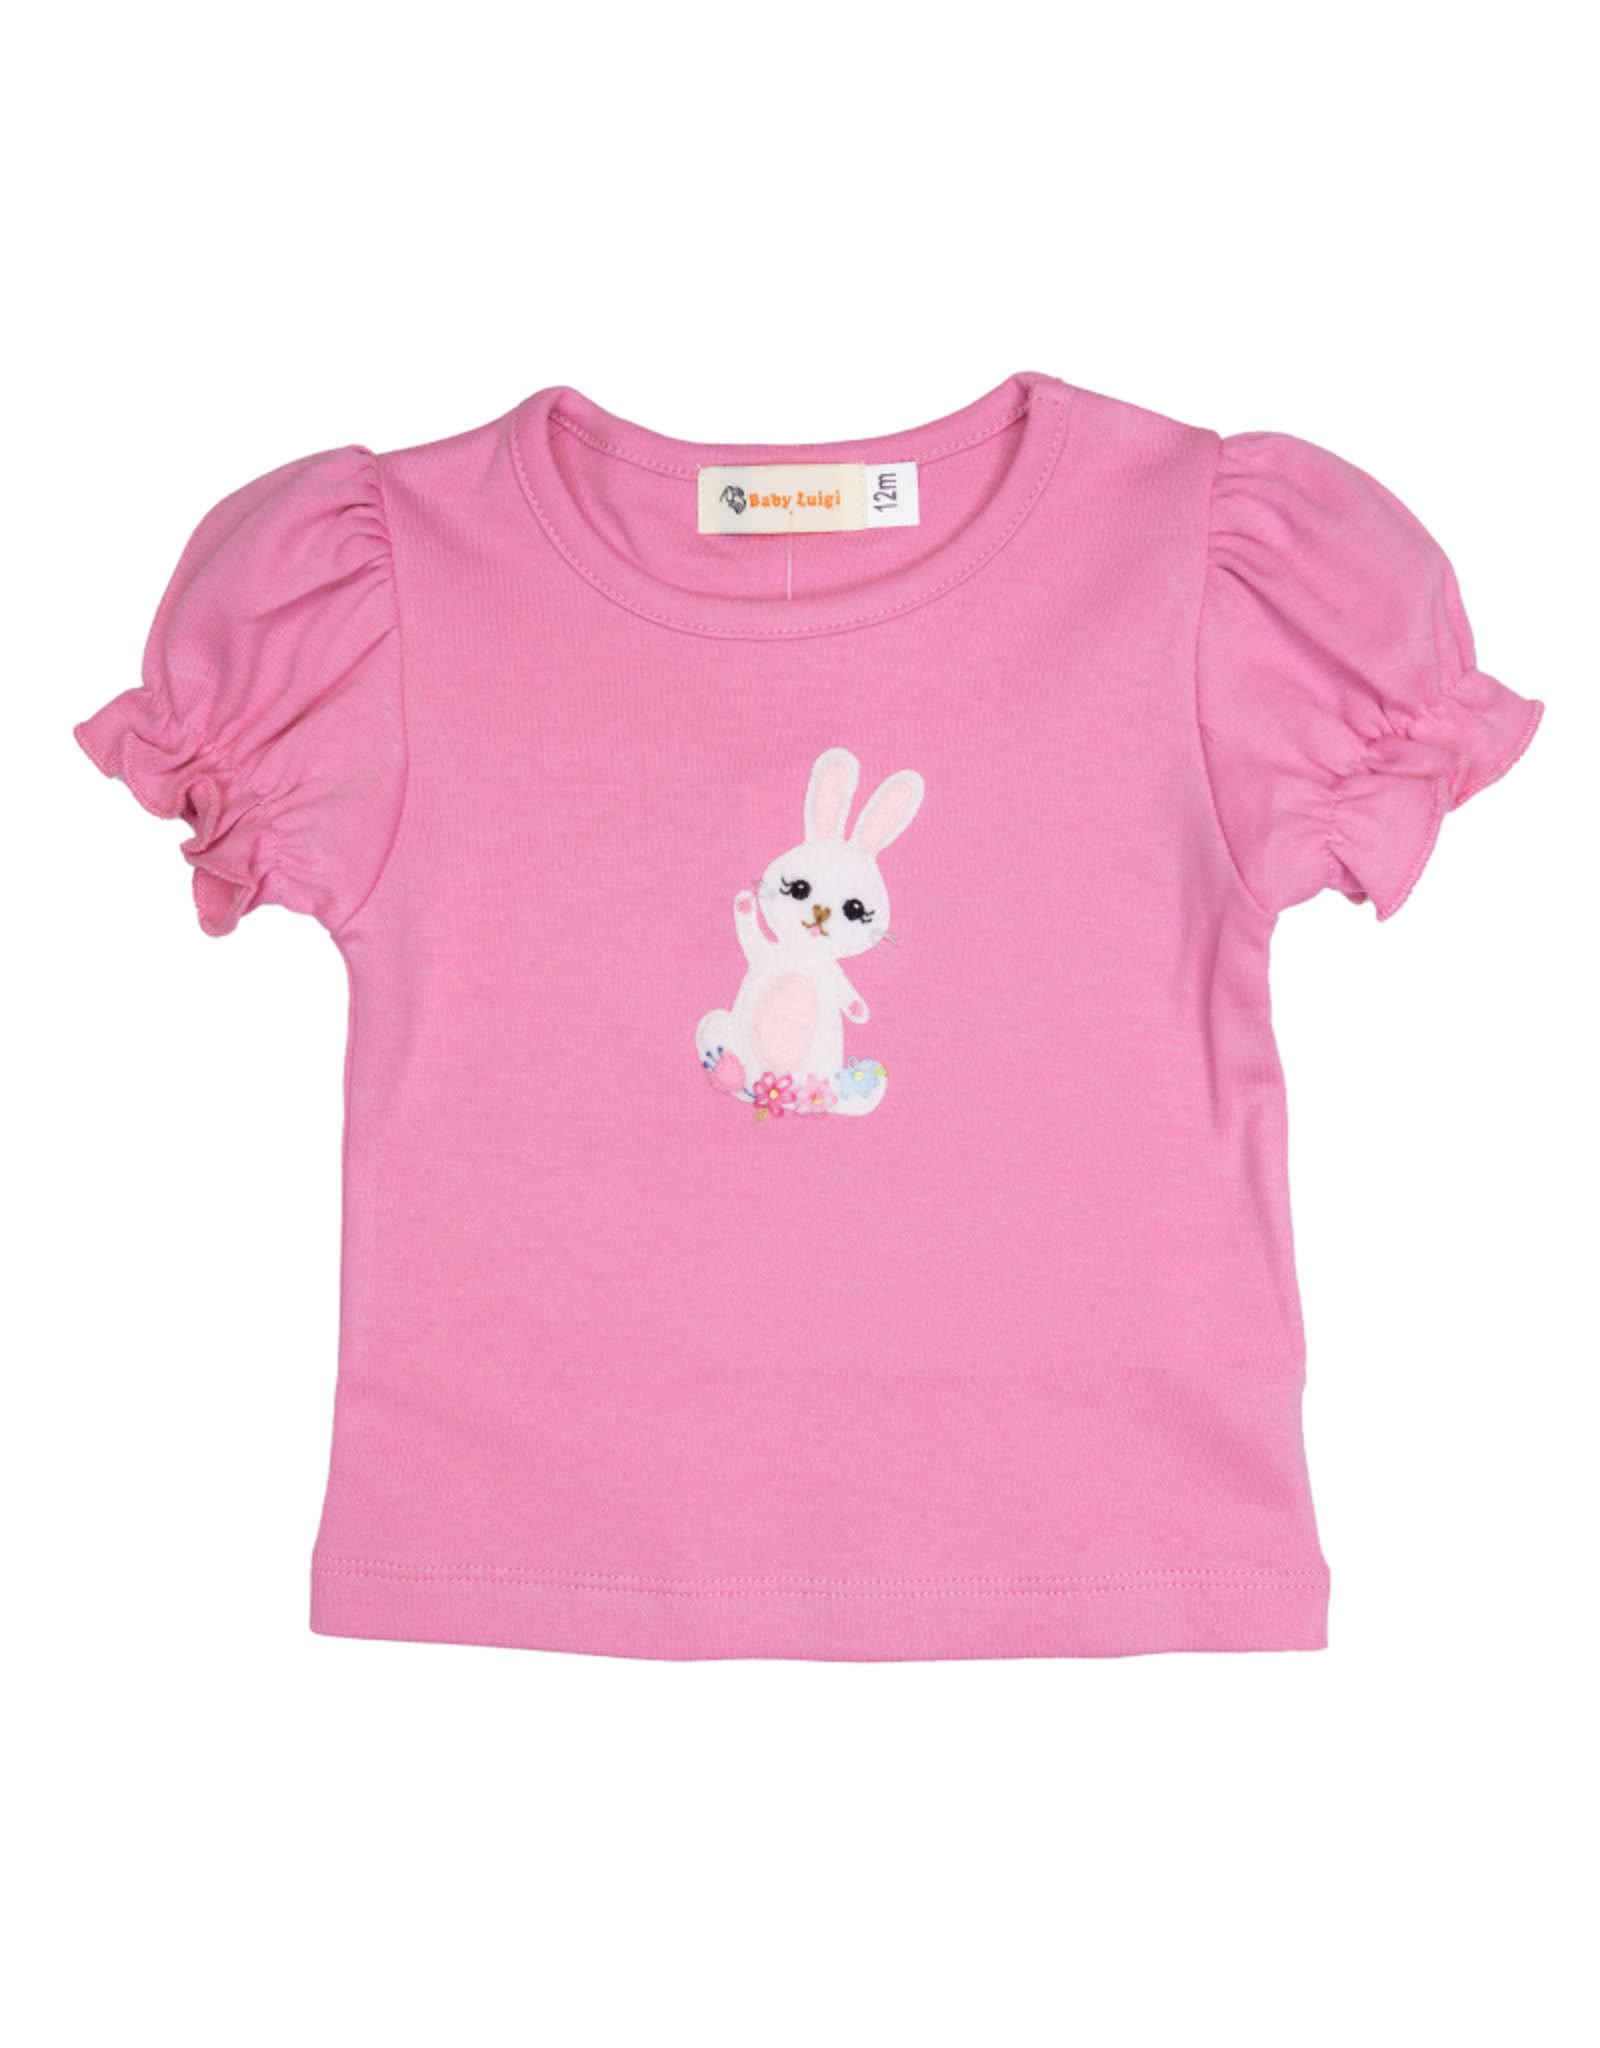 Luigi S24 Pink Bunny Shirt